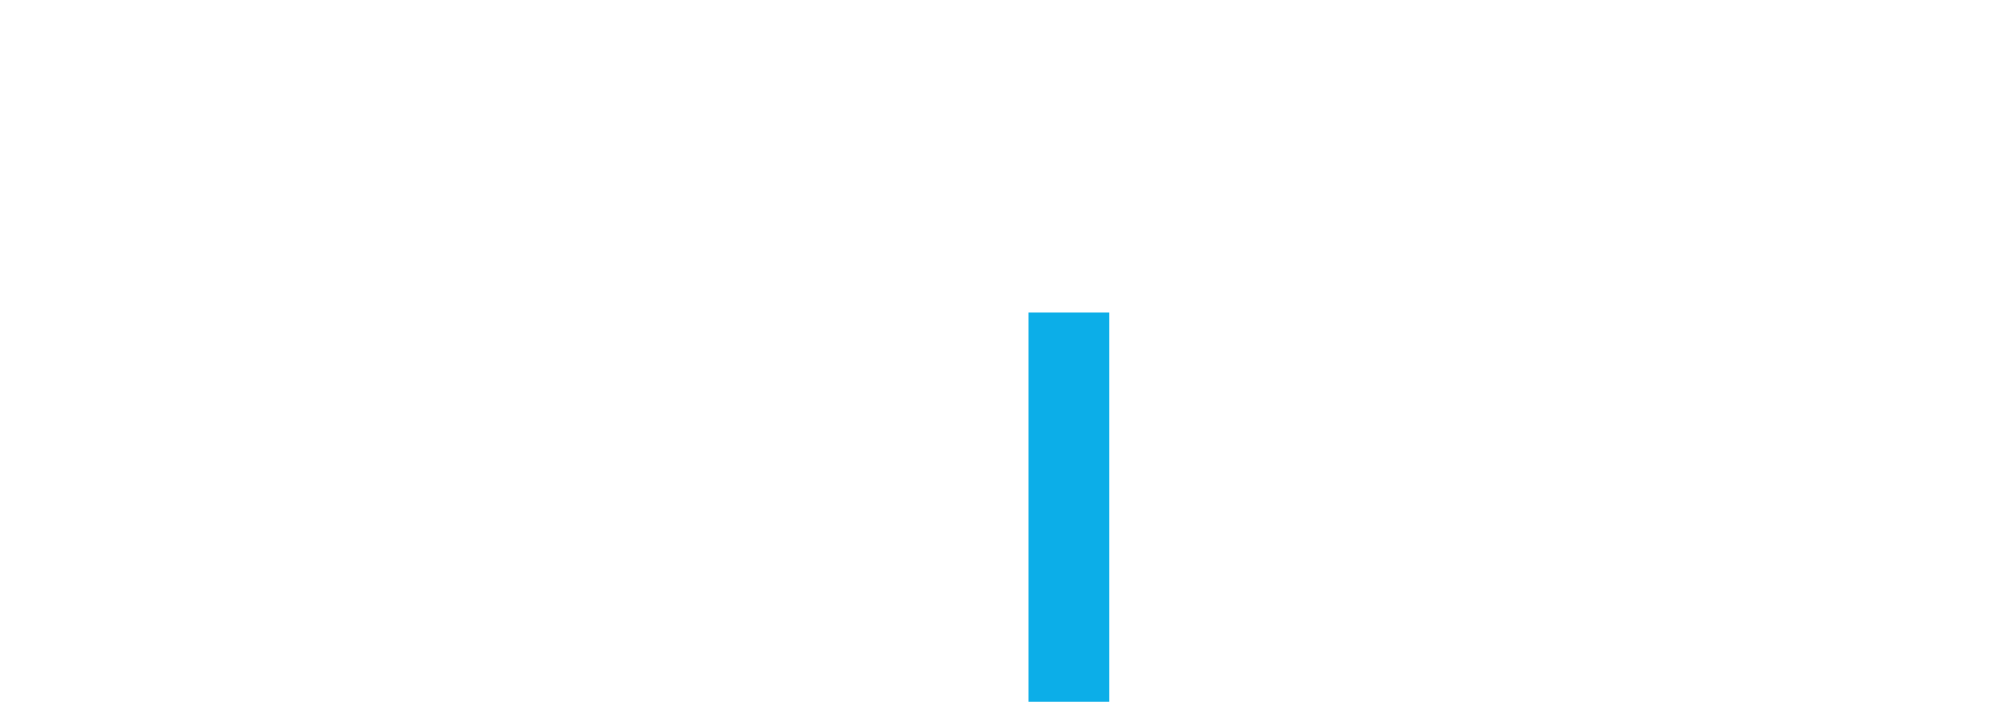 Vertical blue bar that is part of the bar graph